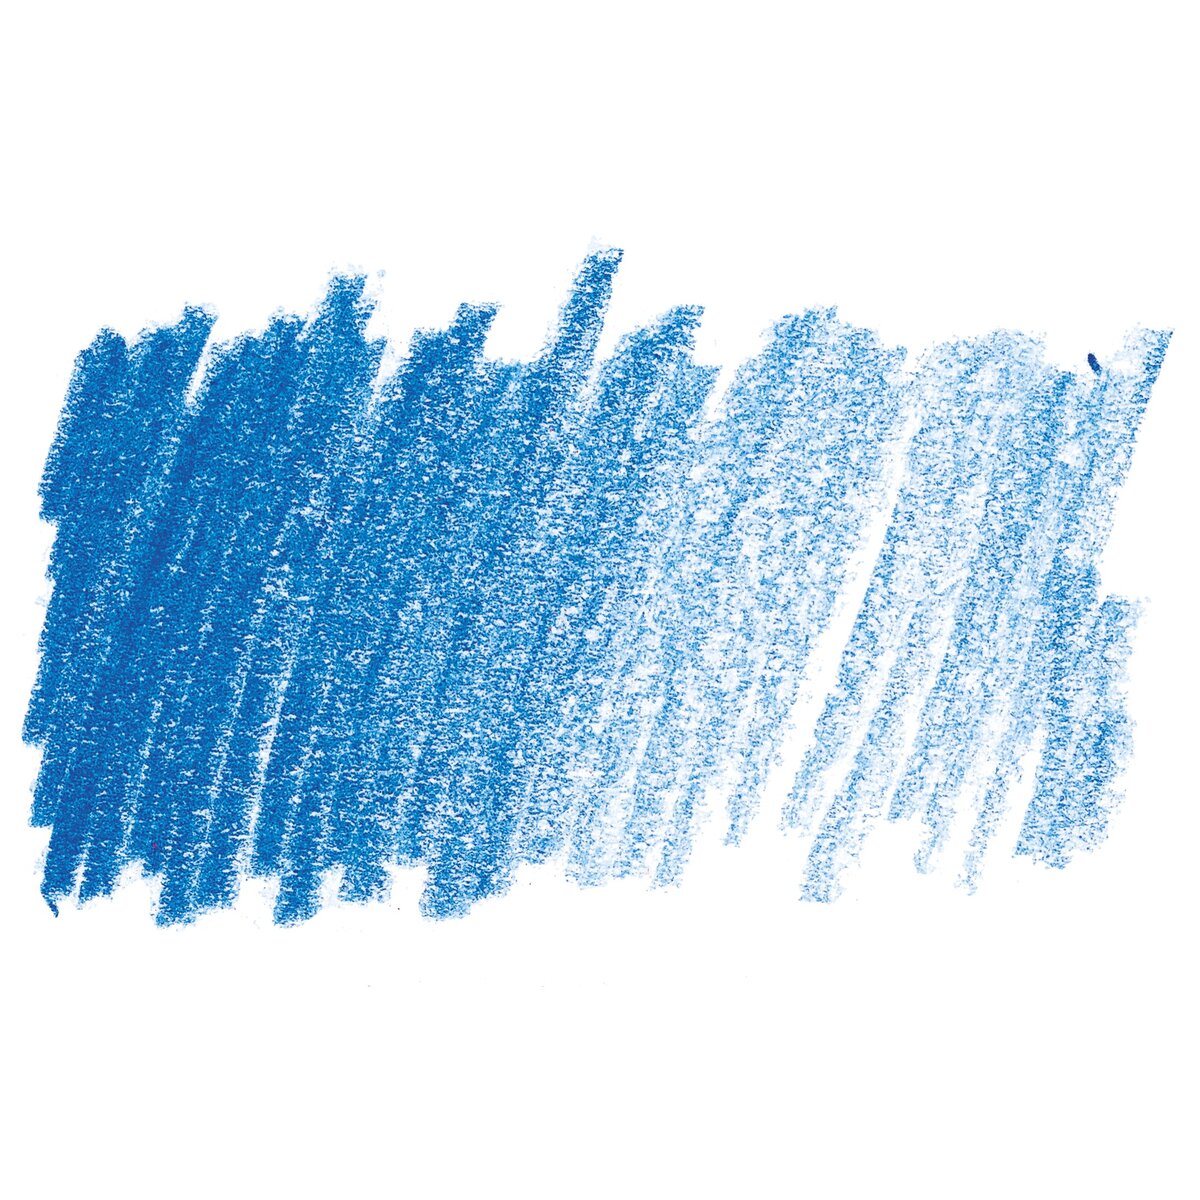 Stabilo : CarbOthello : Pastel Pencil : Ultramarine Blue Light : 435